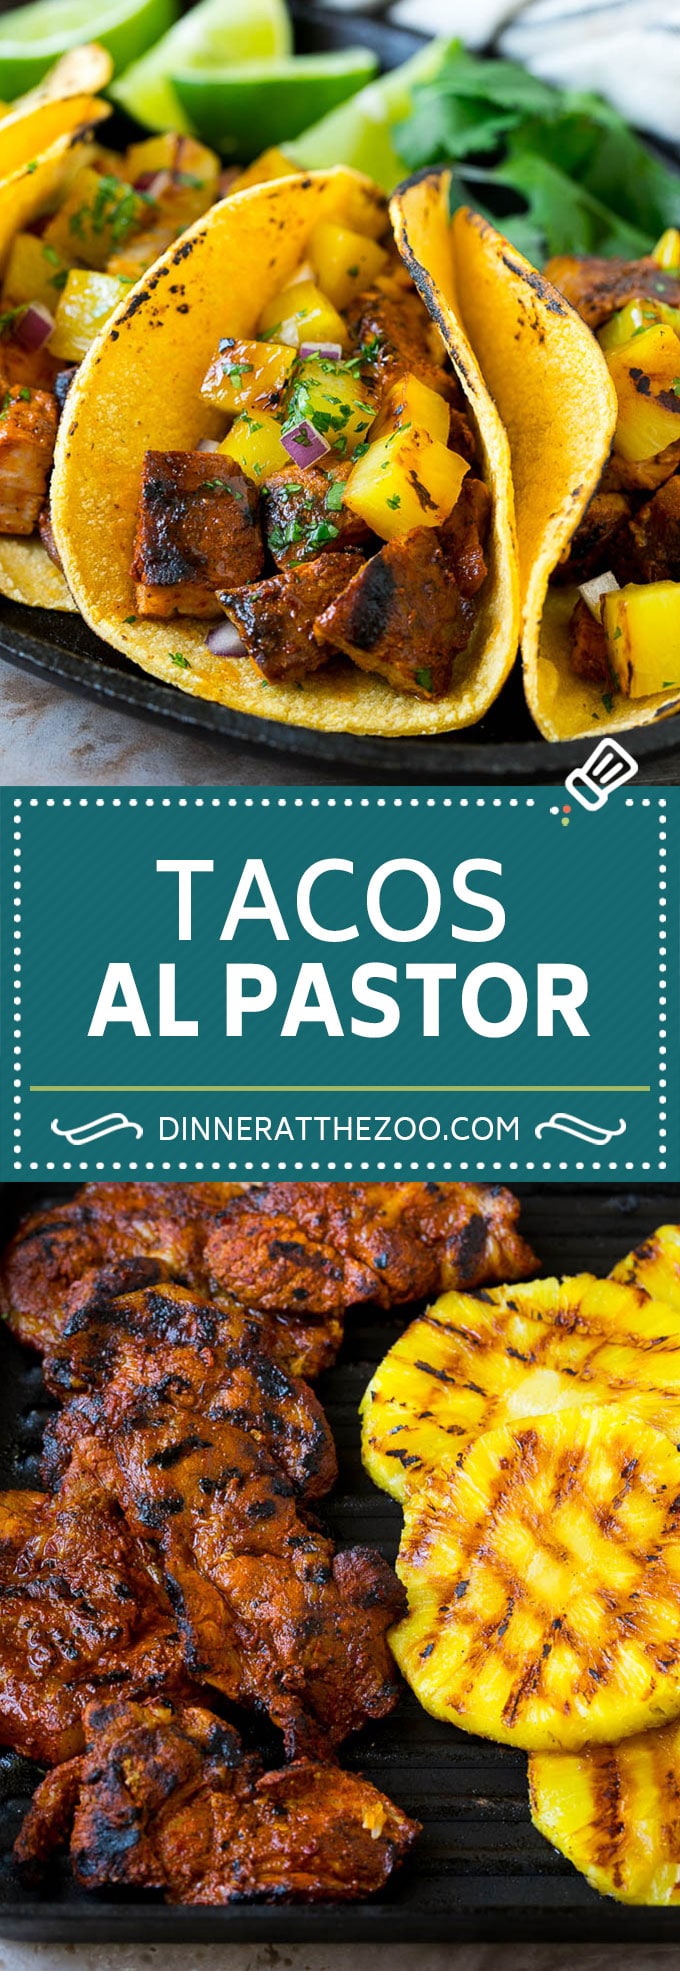 Tacos al Pastor Recipe | Pork Tacos | Mexican Tacos #tacos #pork #pineapple #grilling #tacotuesday #dinner #dinneratthezoo